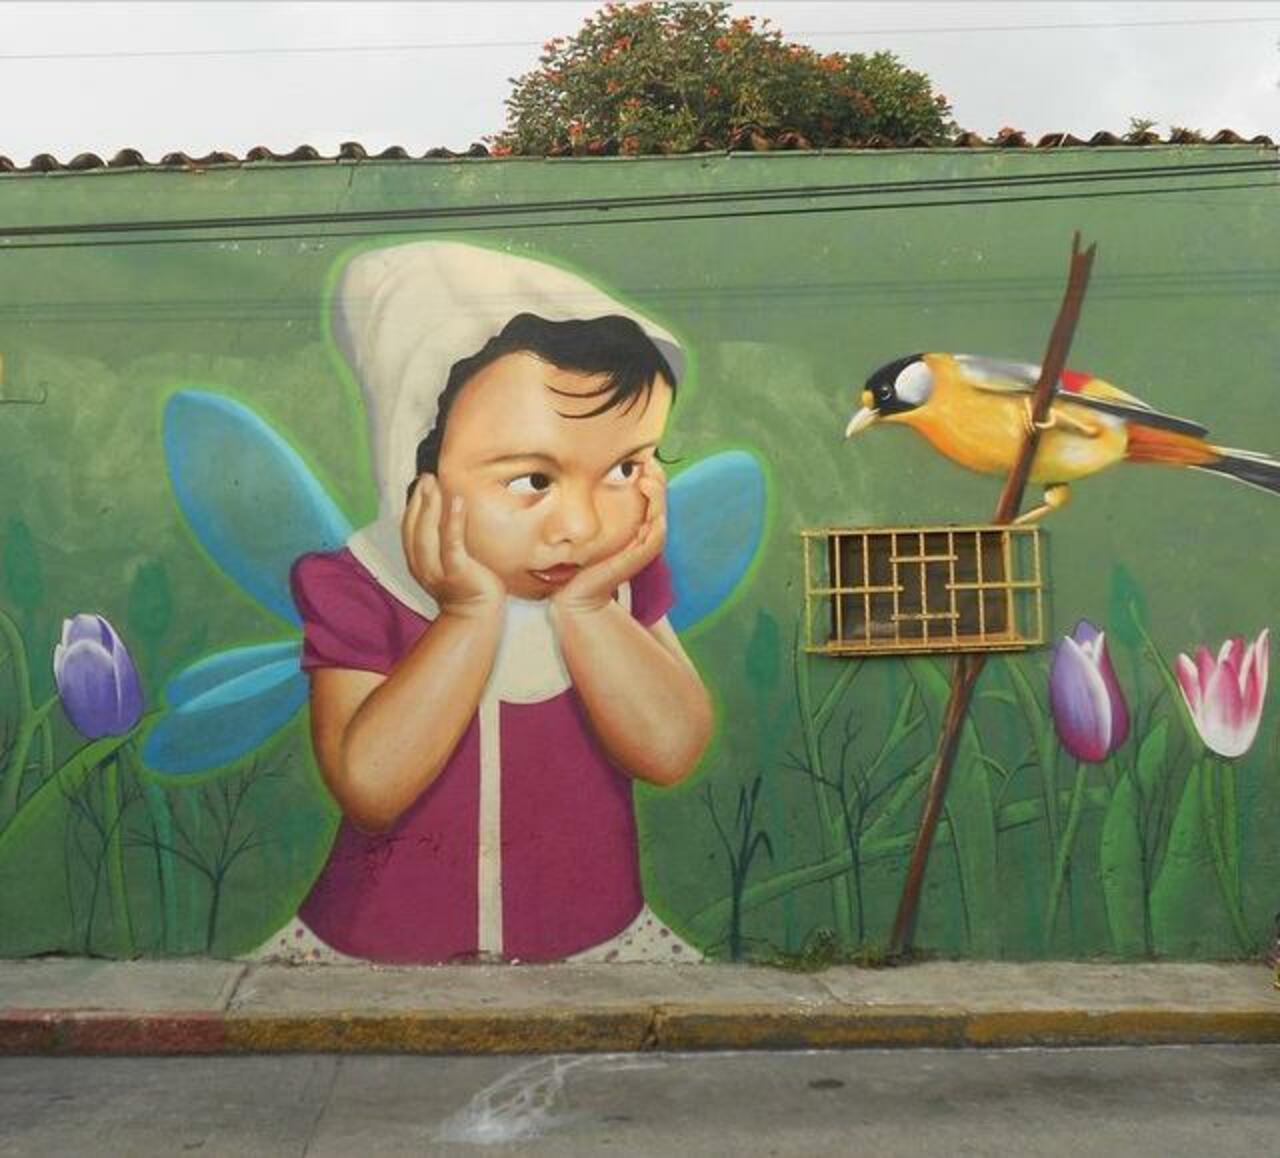 RT @GoogleStreetArt Endearing Street Art by Facte in Mexico 

#art #arte #graffiti #streetart http://t.co/k2g7ApJZS4